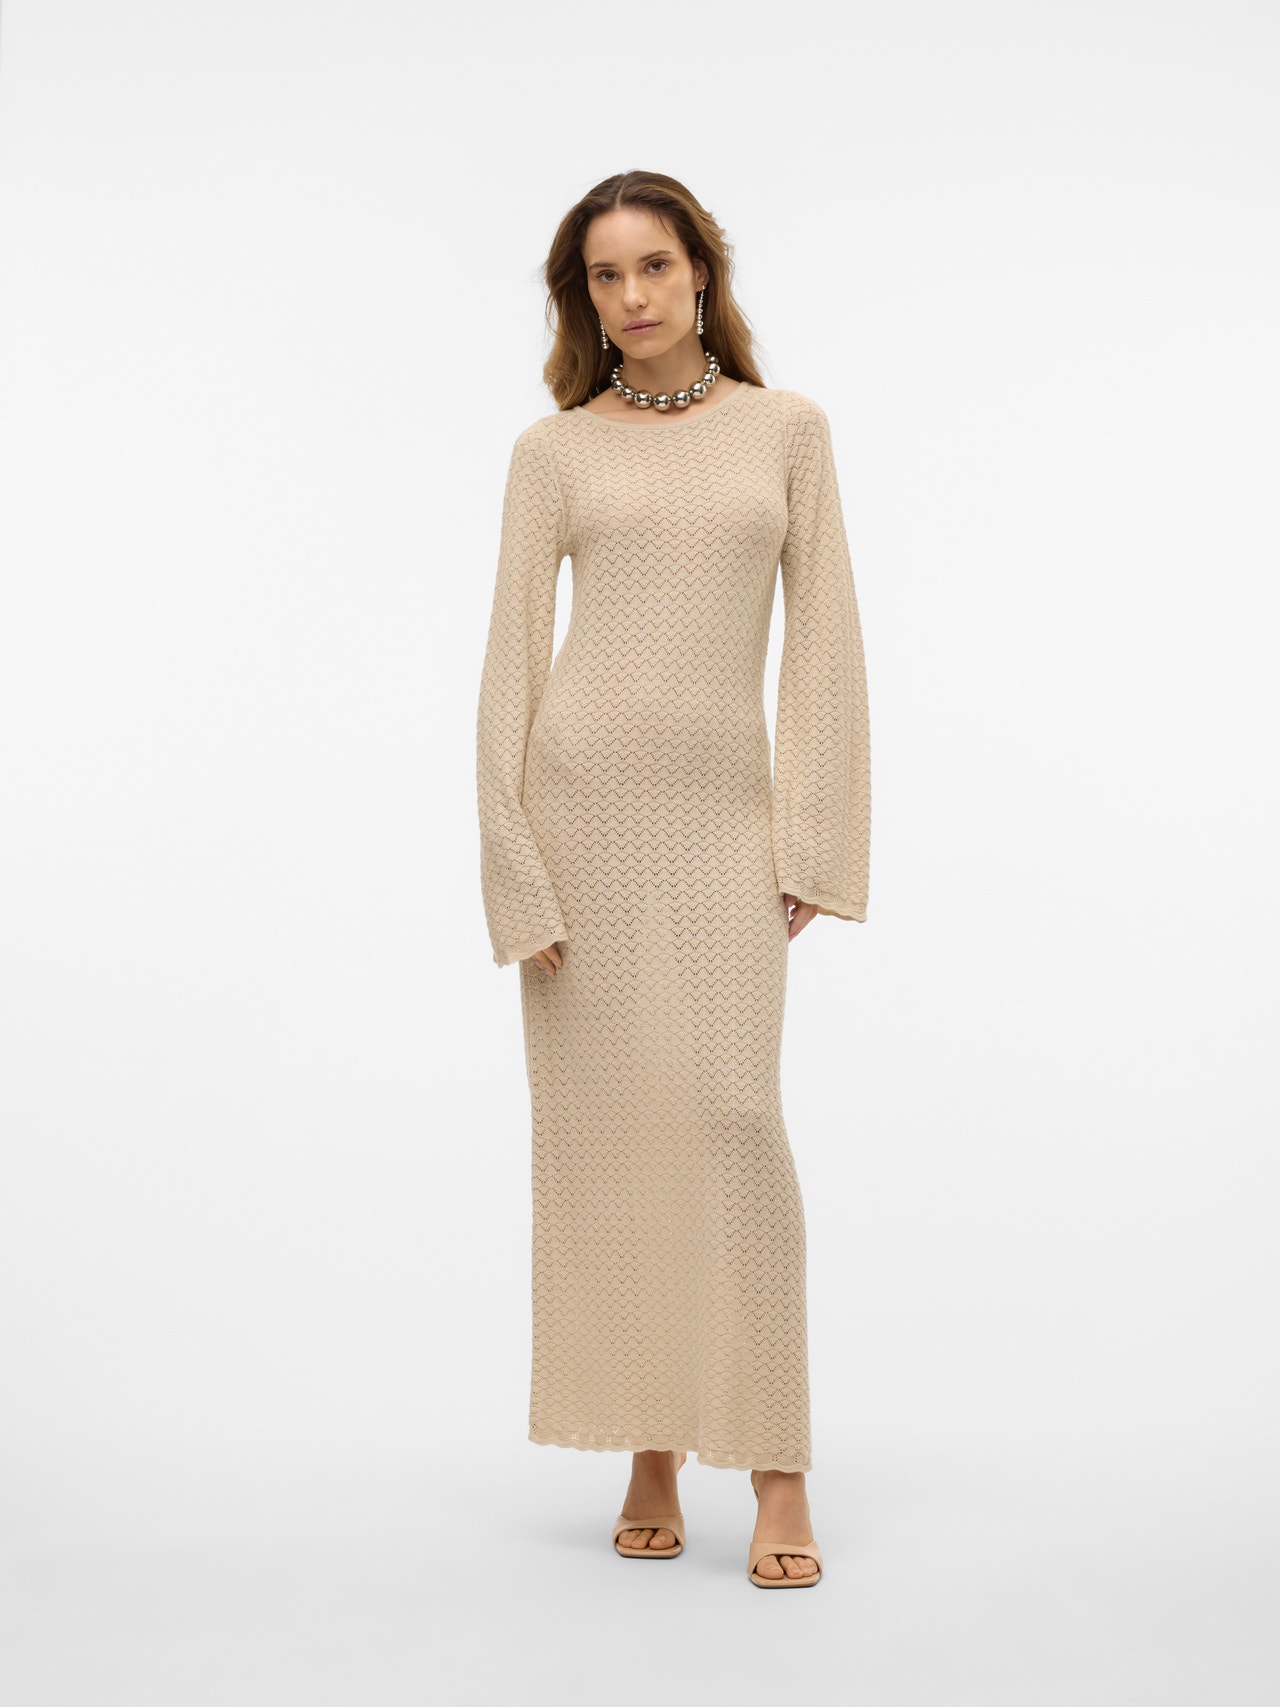 Vero Moda VMIBERIA Long dress -Oatmeal - 10300501